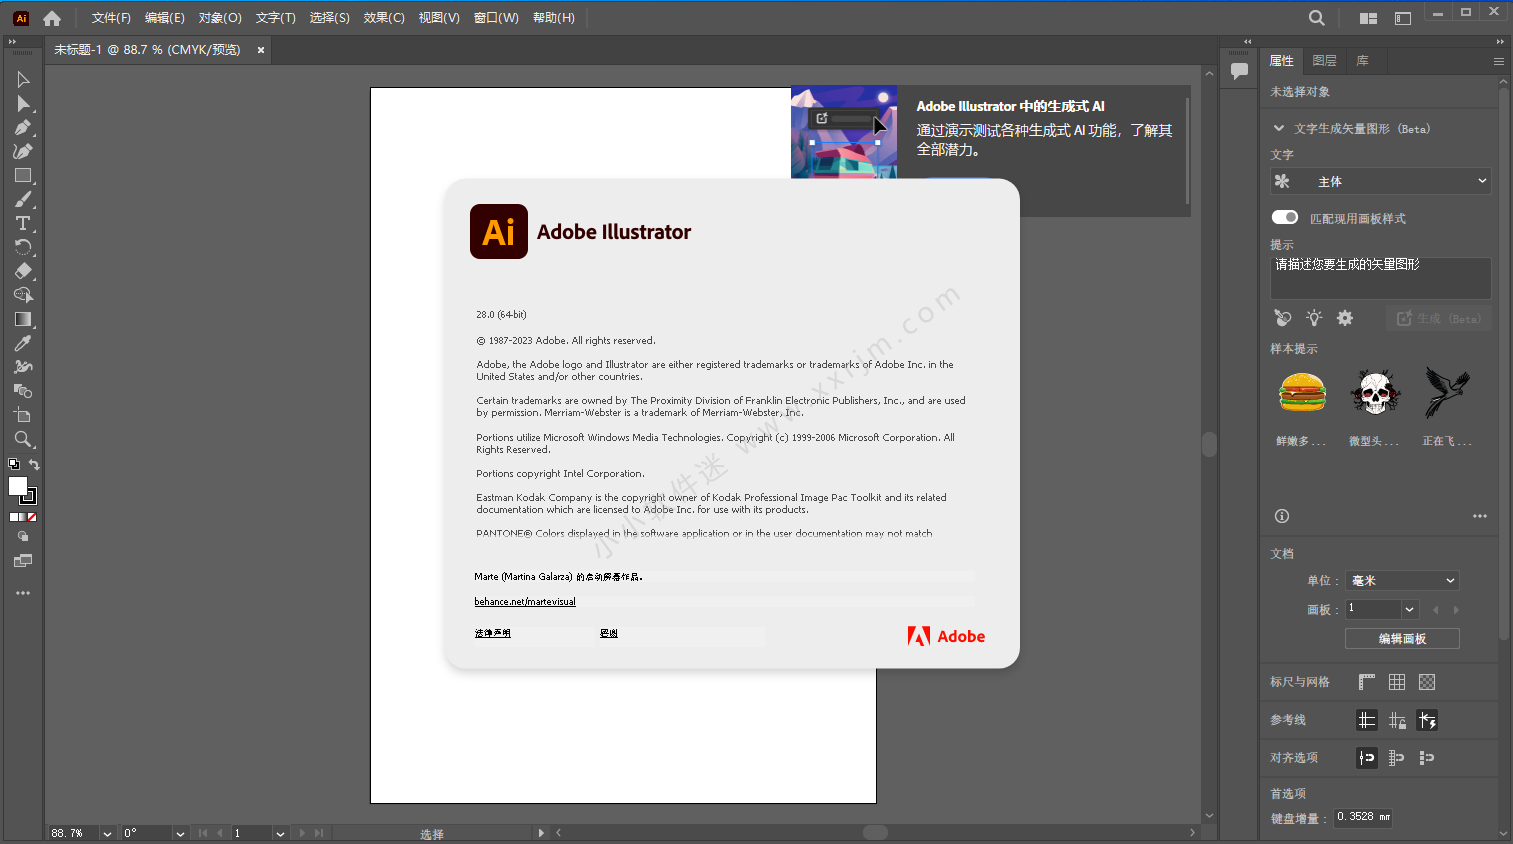 for mac download Adobe Illustrator 2024 v28.0.0.88